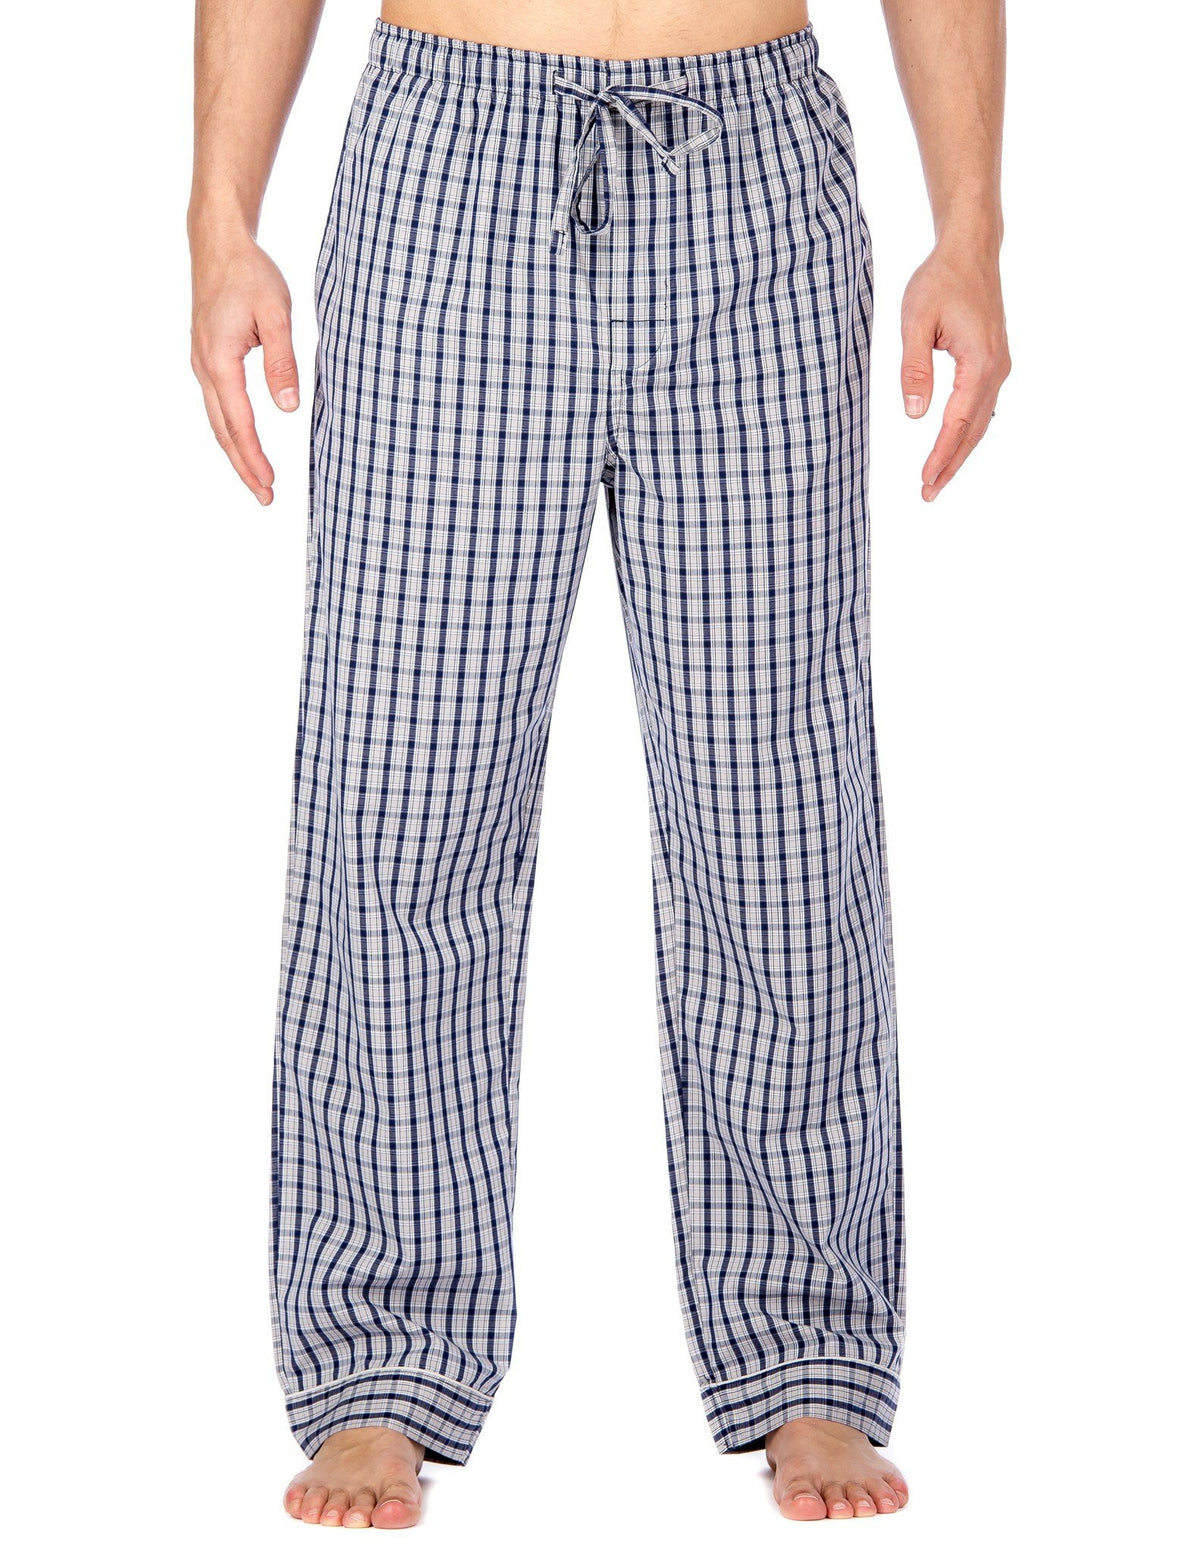 Men's Bamboo Sleep/Lounge Pants - Checks Gray-Black